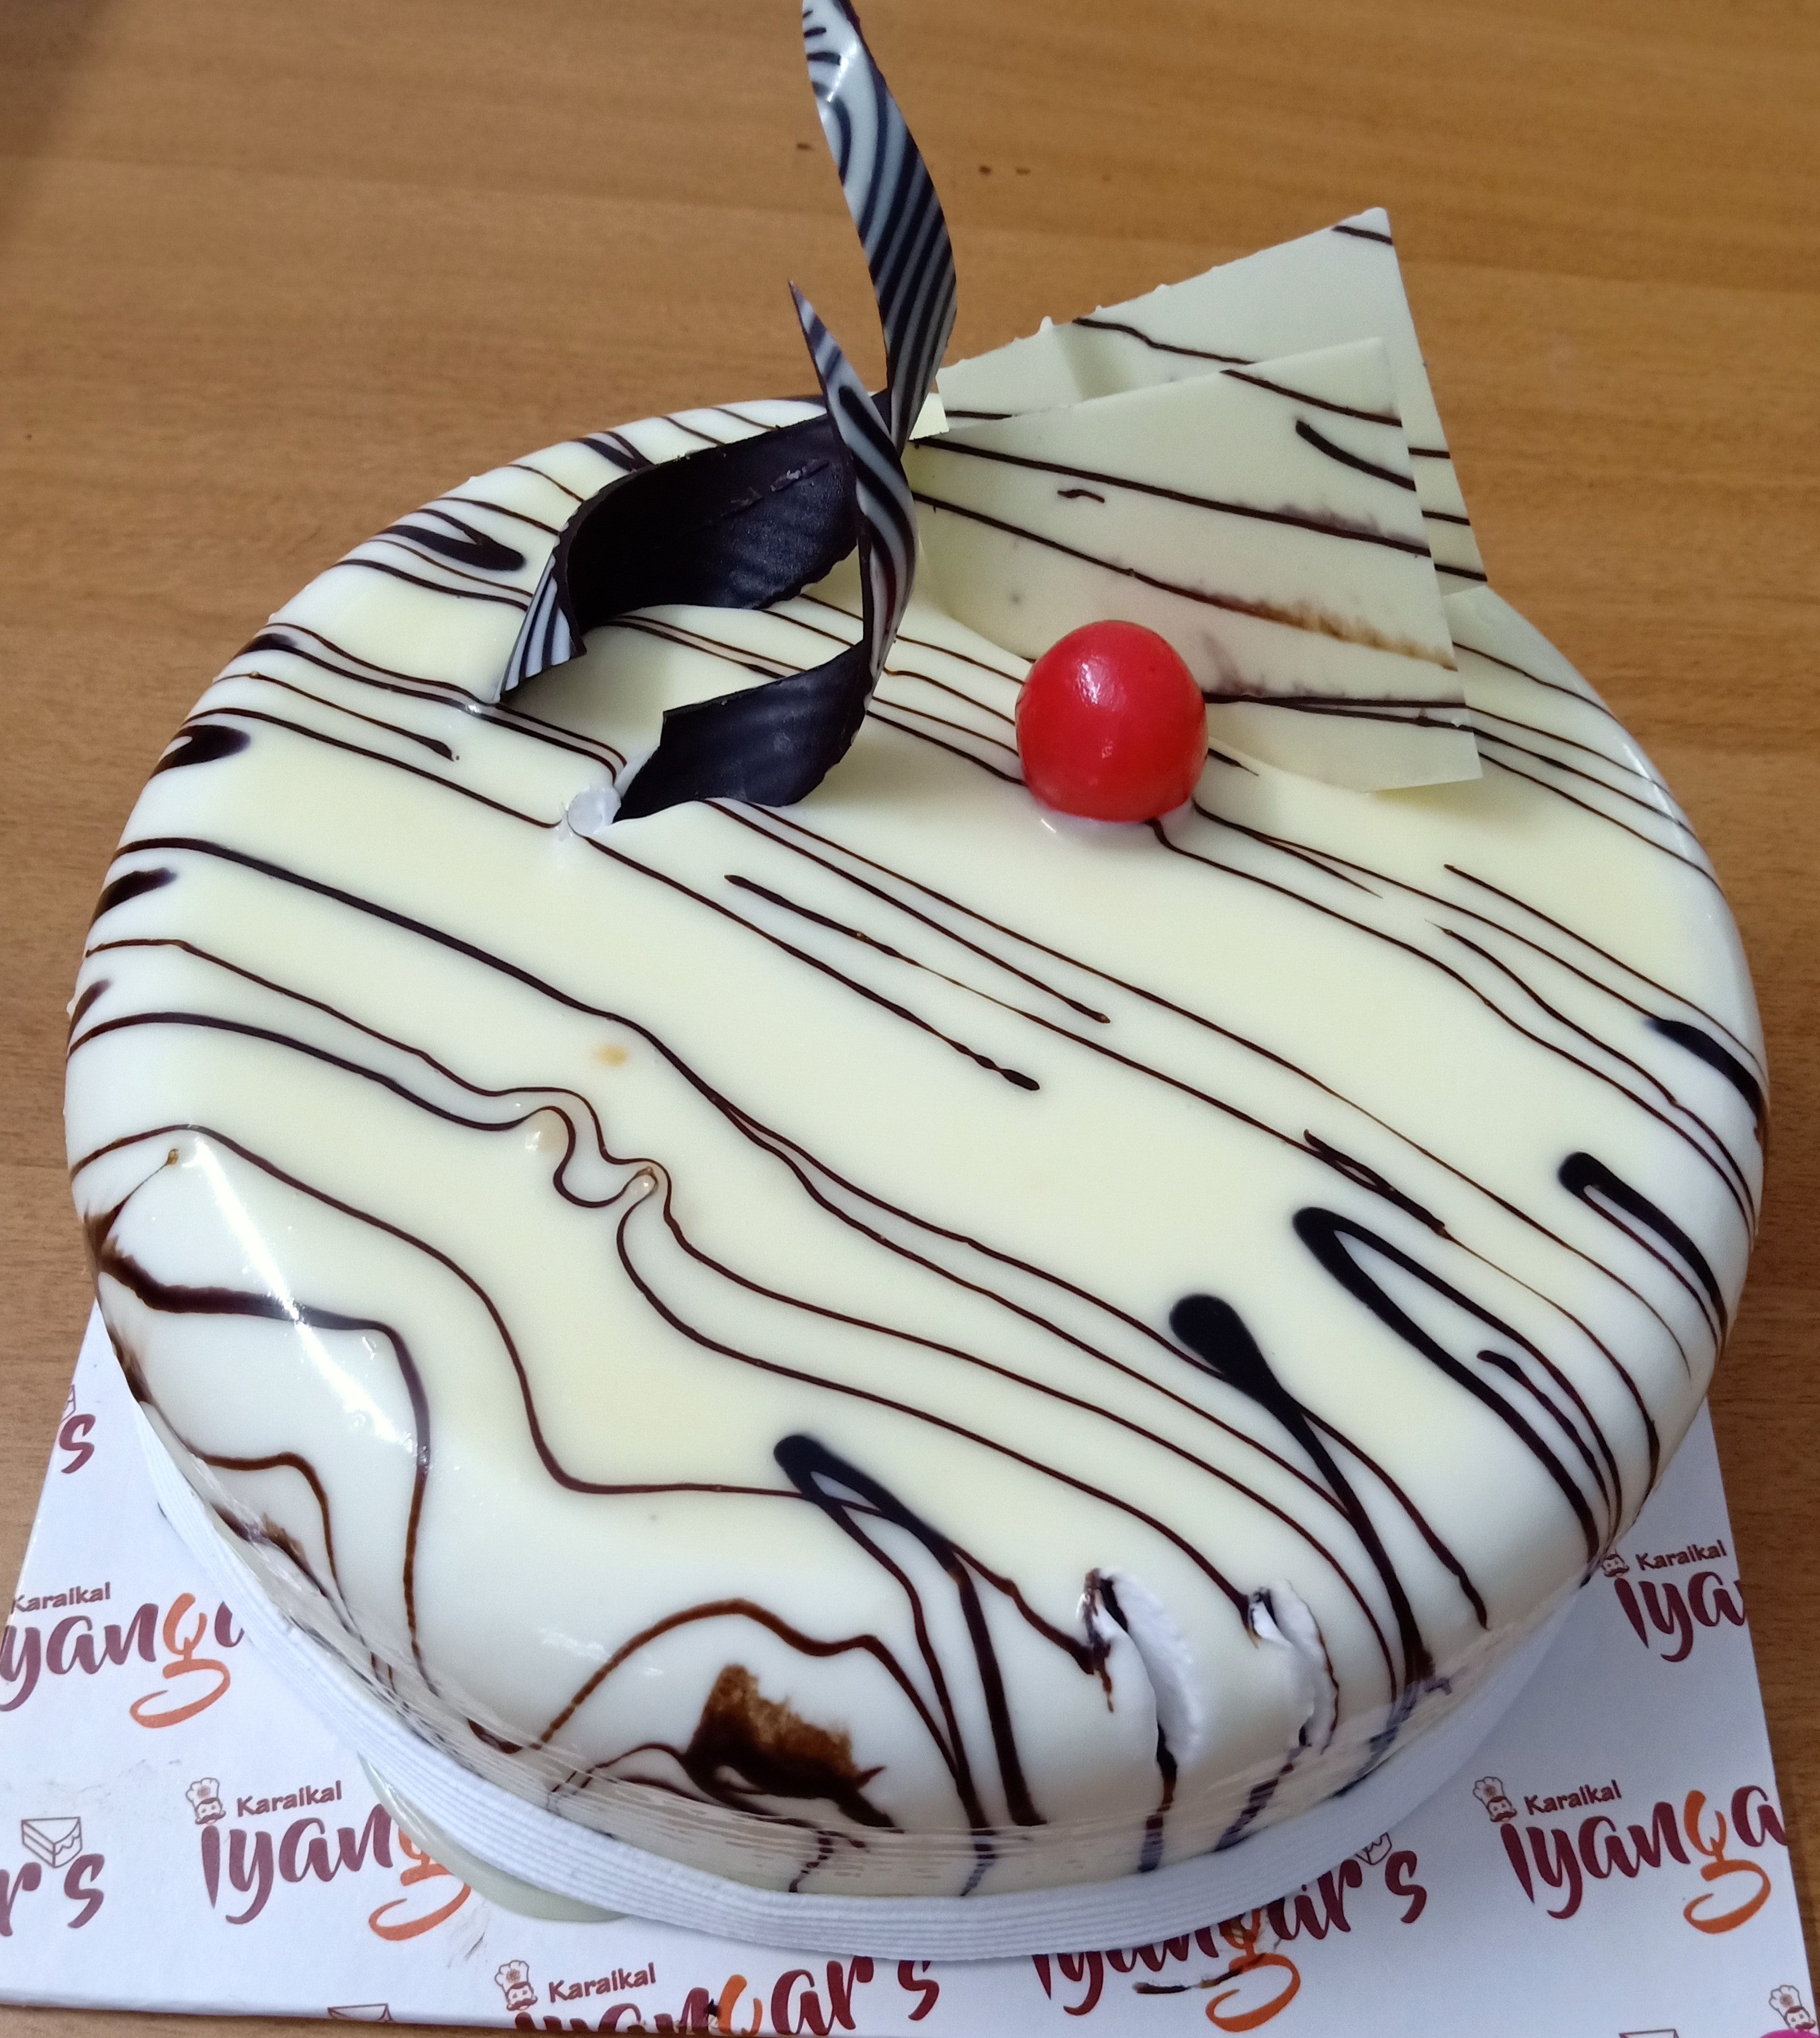 Cake Bliss, Sasthamangalam, Trivandrum | Zomato